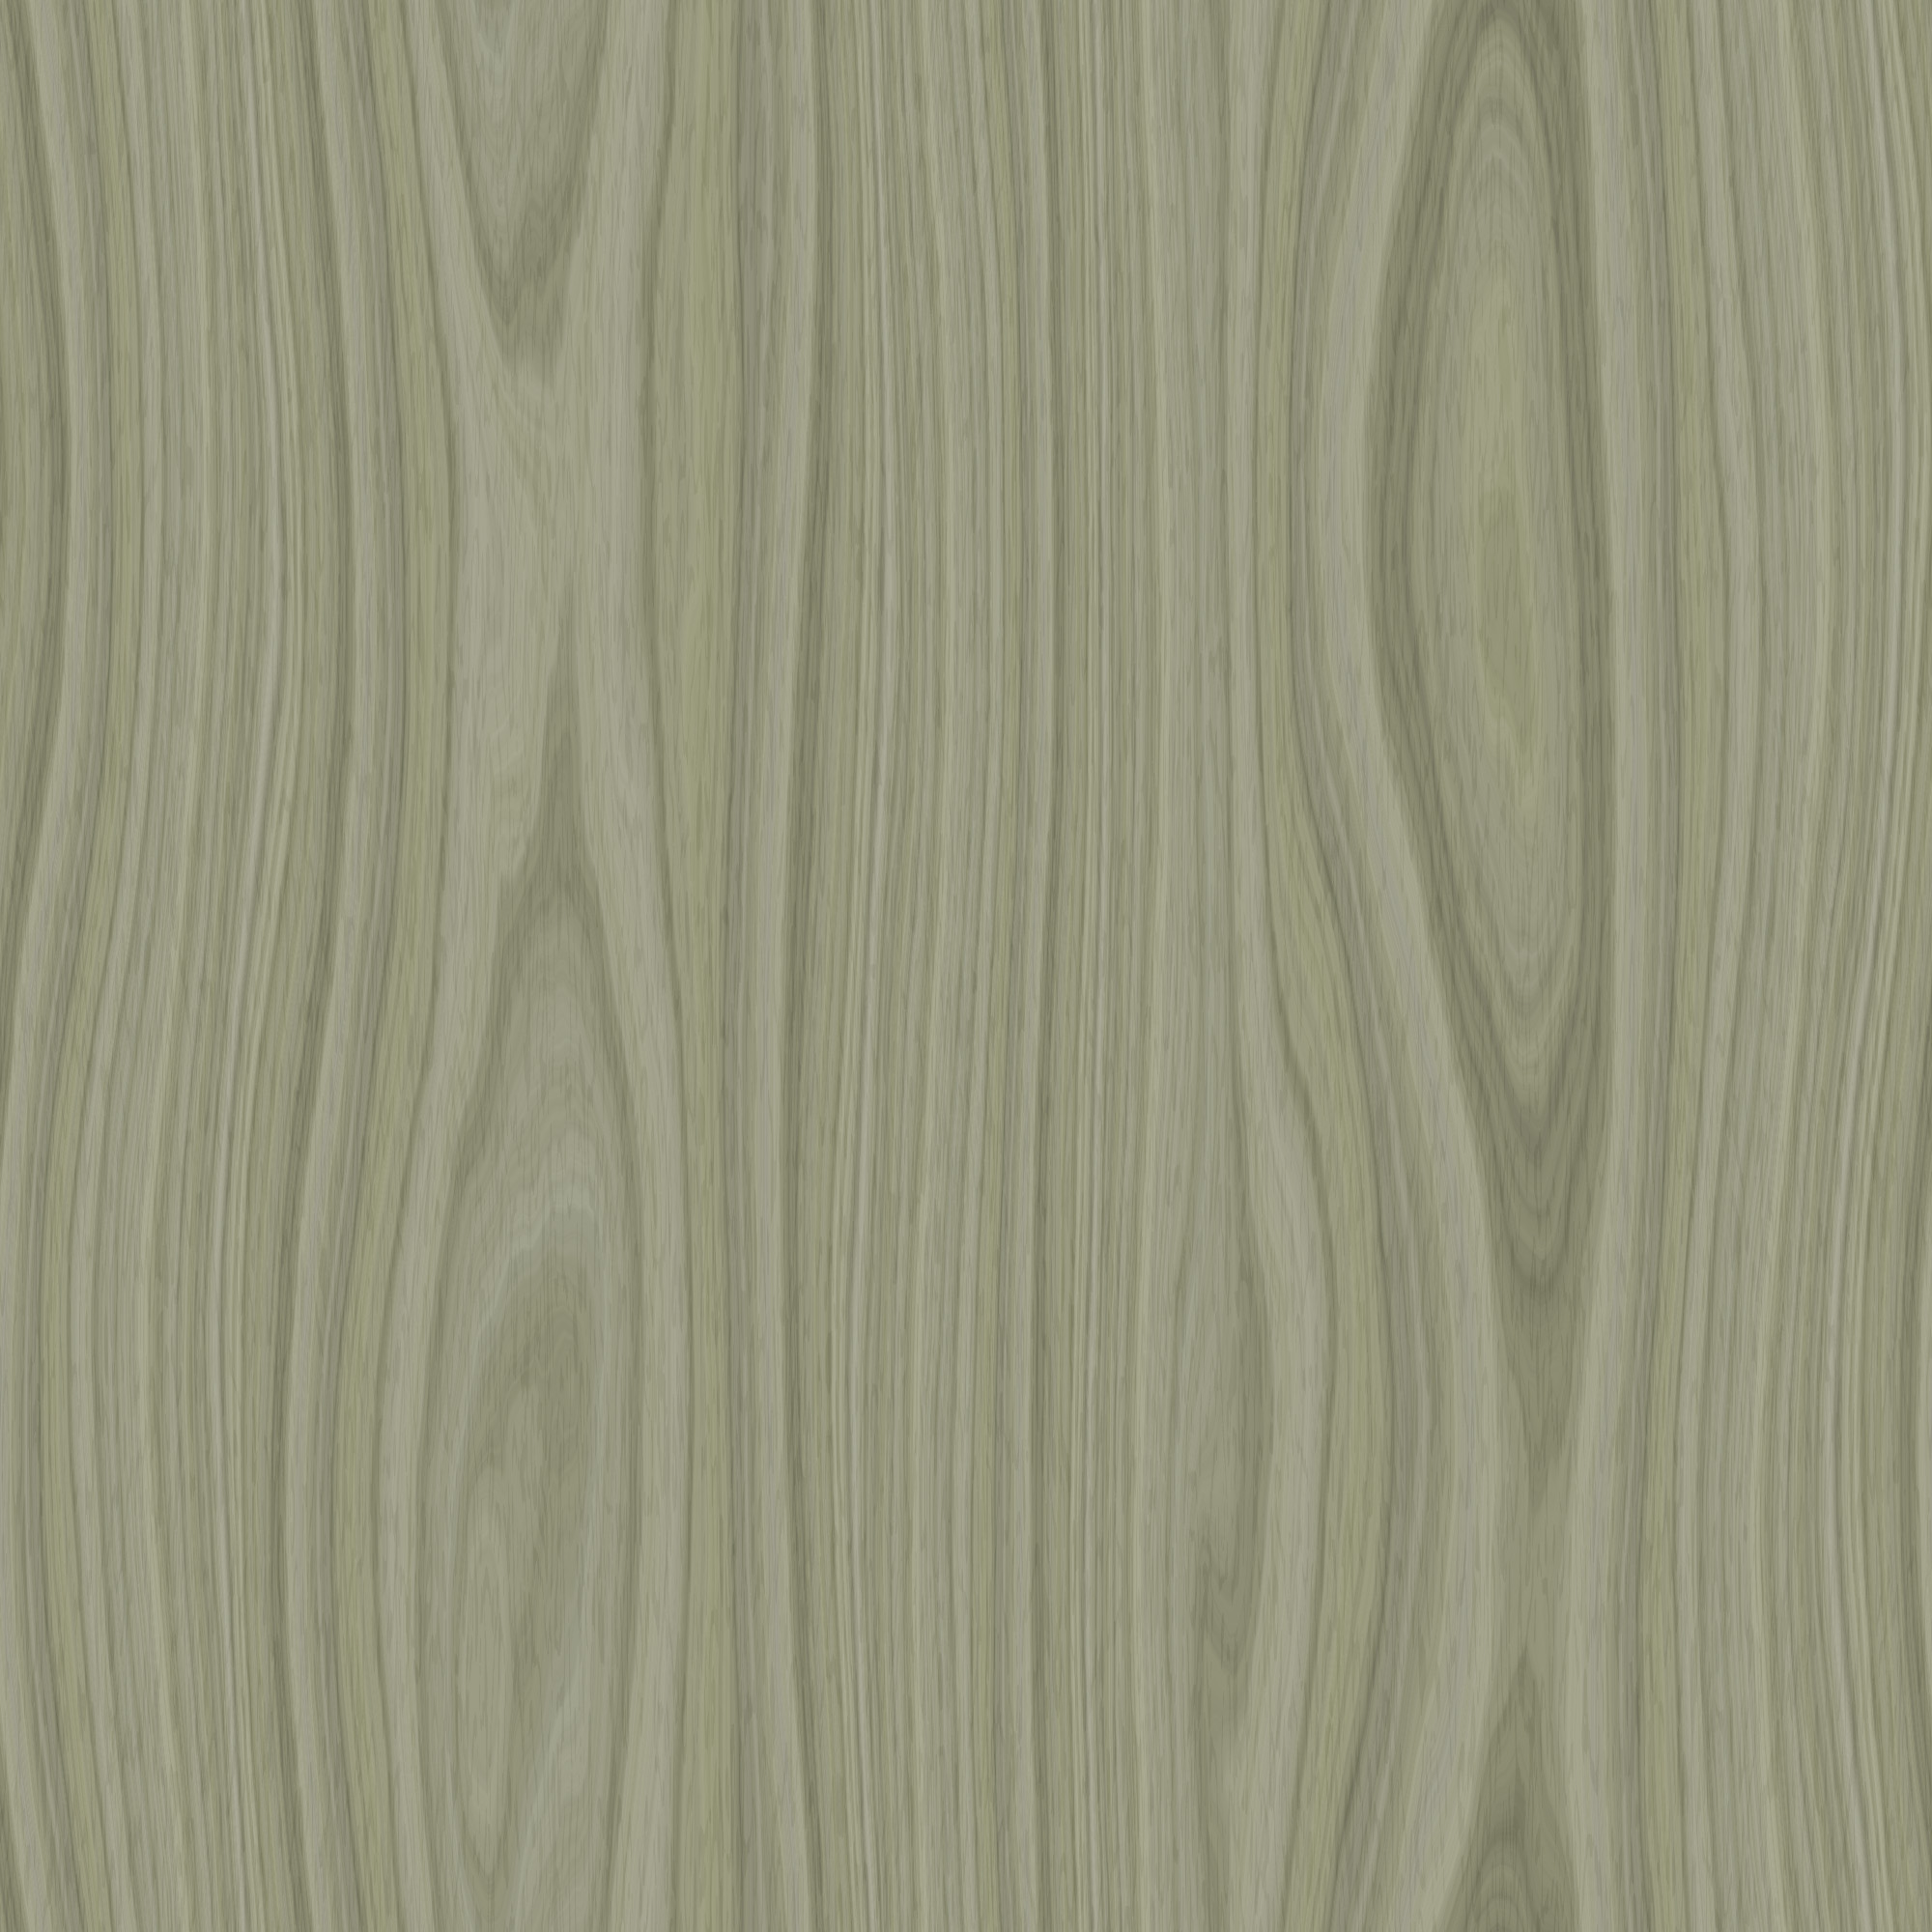 Wood Texture Seamless Green Gray Woodgrain Www